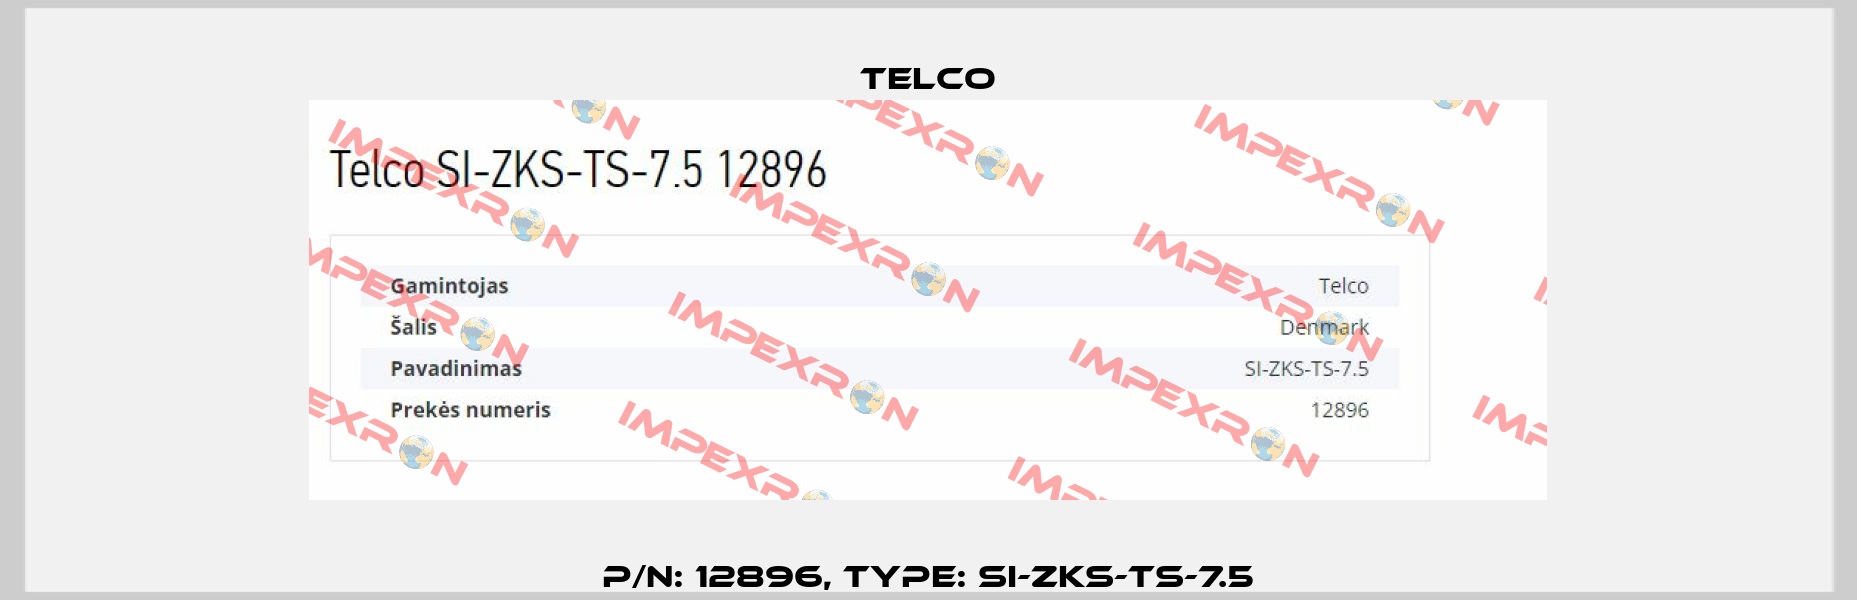 p/n: 12896, Type: SI-ZKS-TS-7.5 Telco